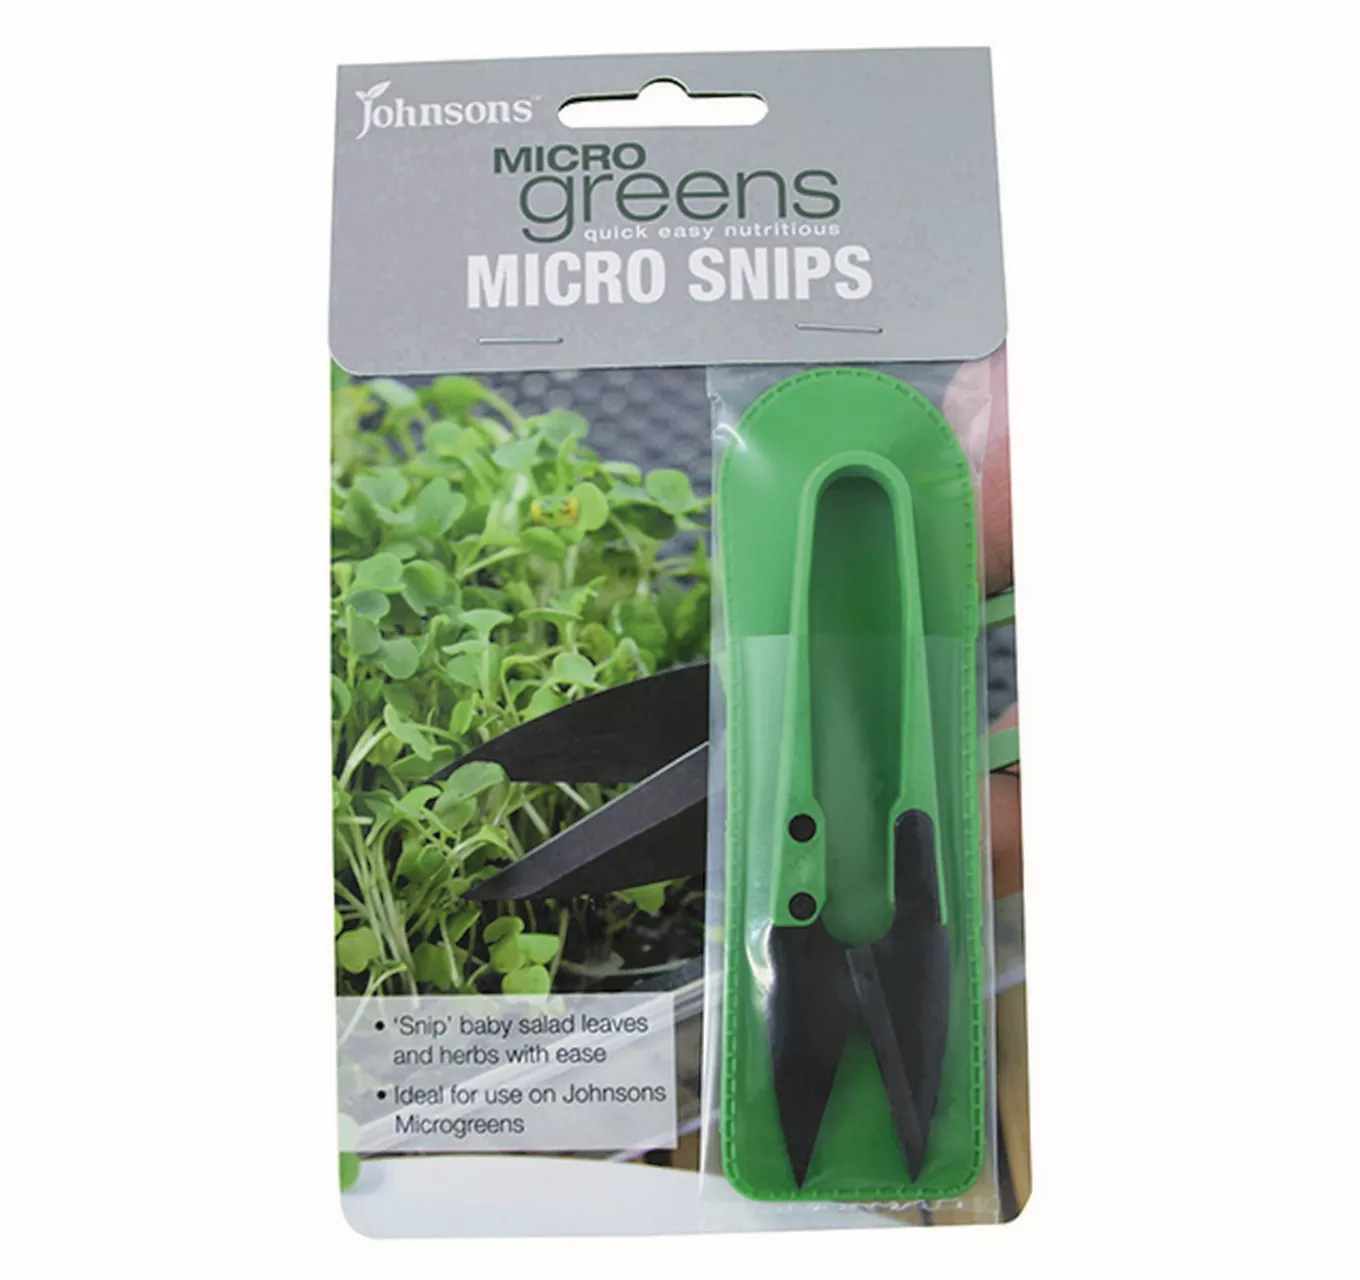 MG Micro Snips